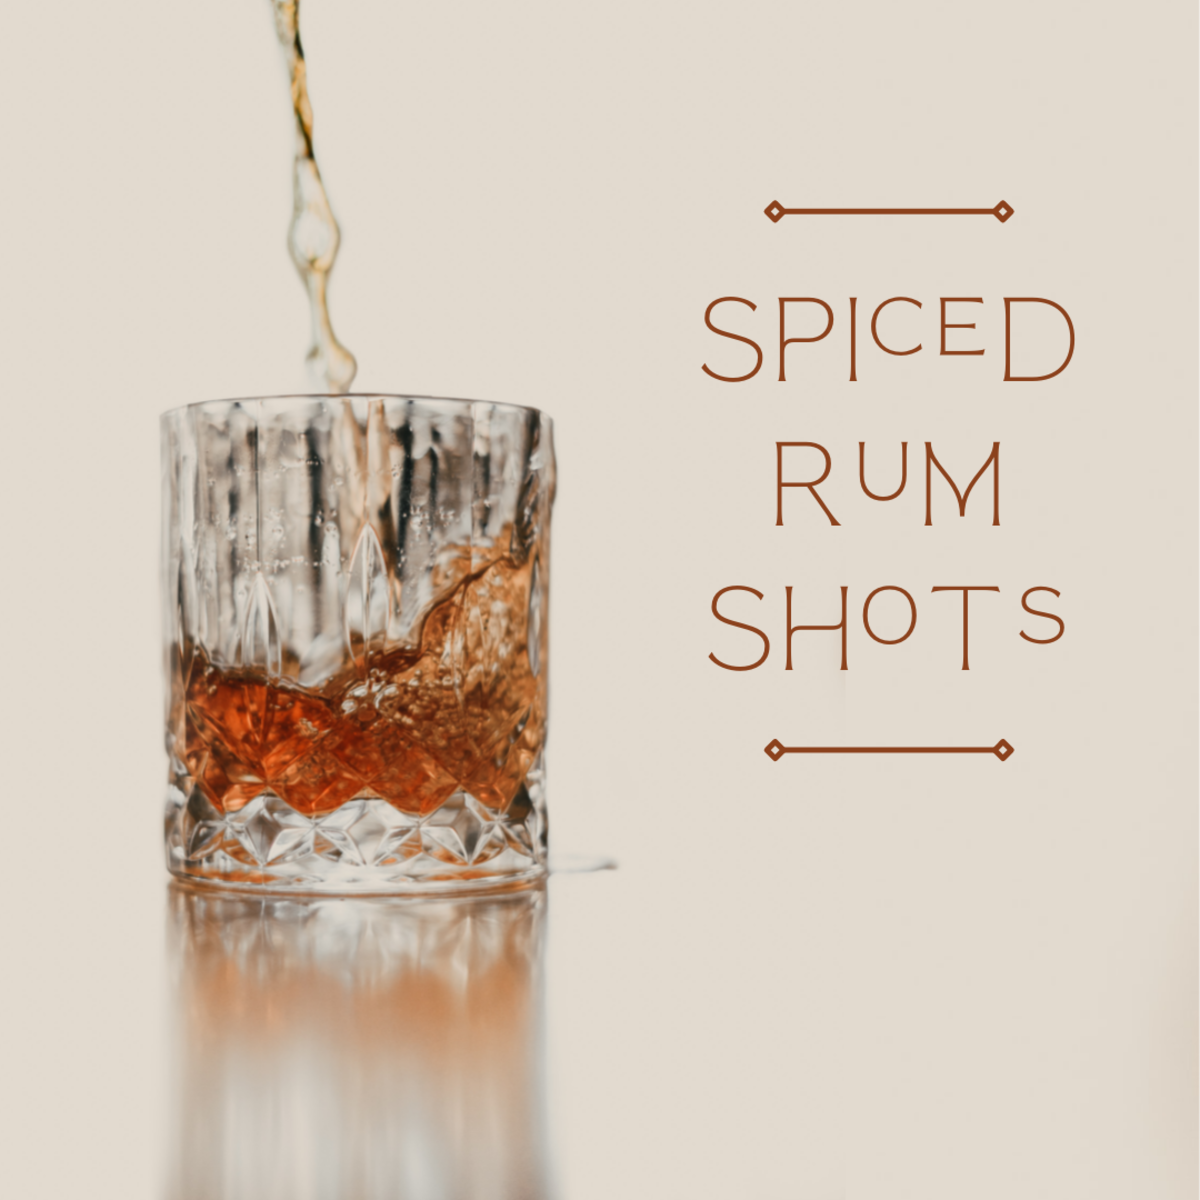 25 fantastically tasty shots containing Captain Morgan Spiced Rum